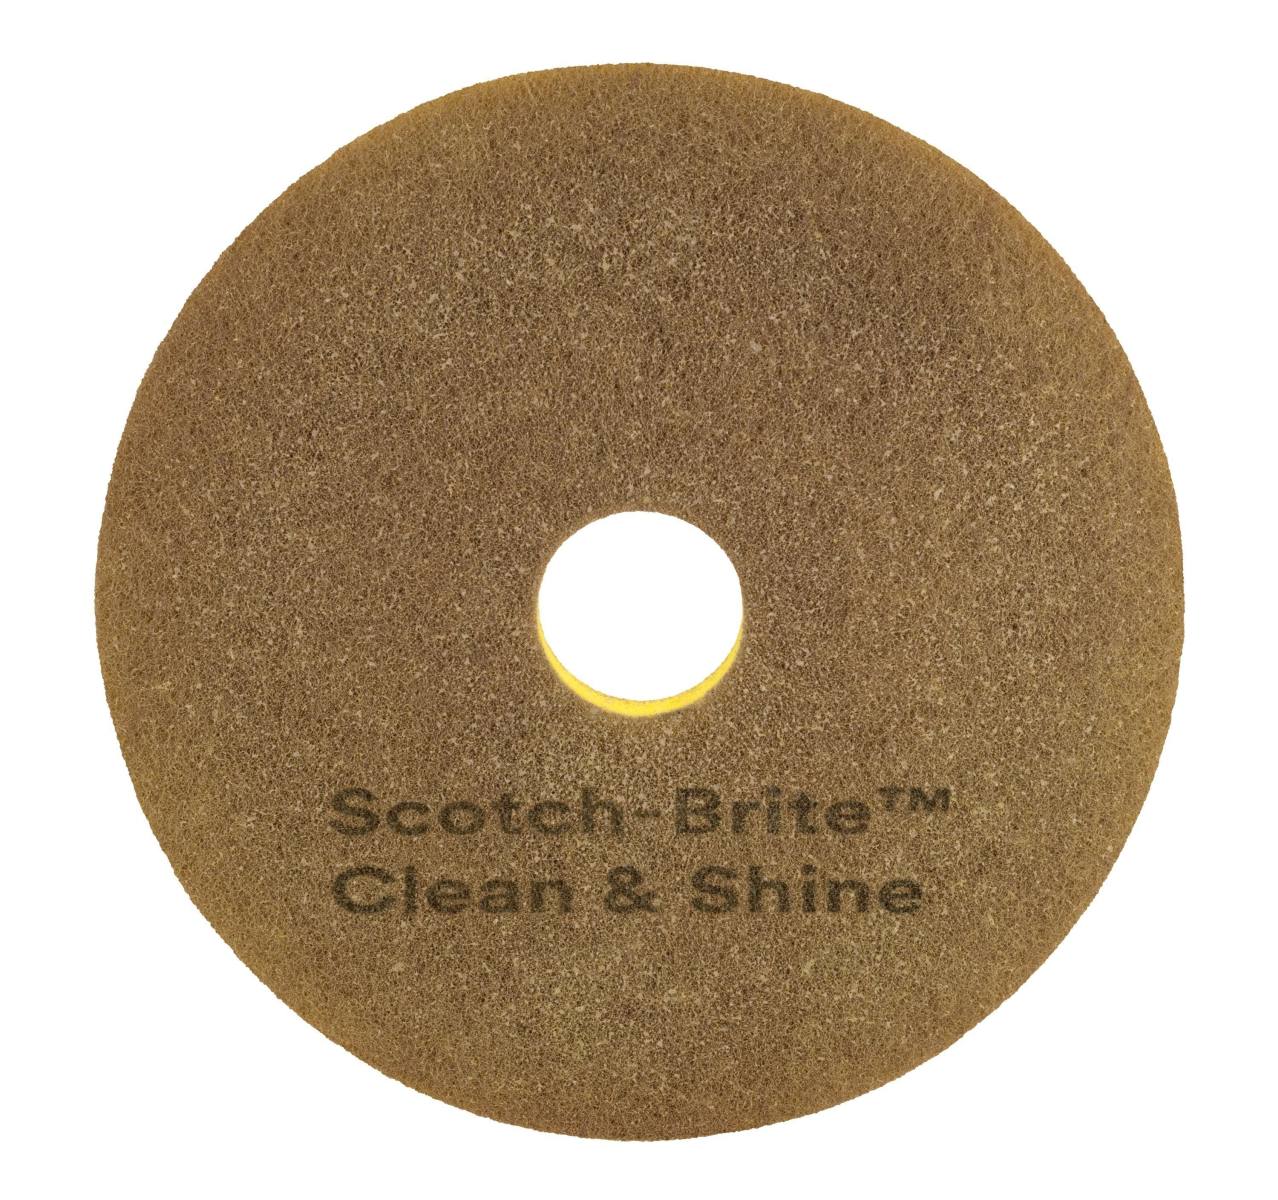 3M Scotch-Brite Clean & Shine Maschinenpad, 530 mm, 5 Stück / Karton